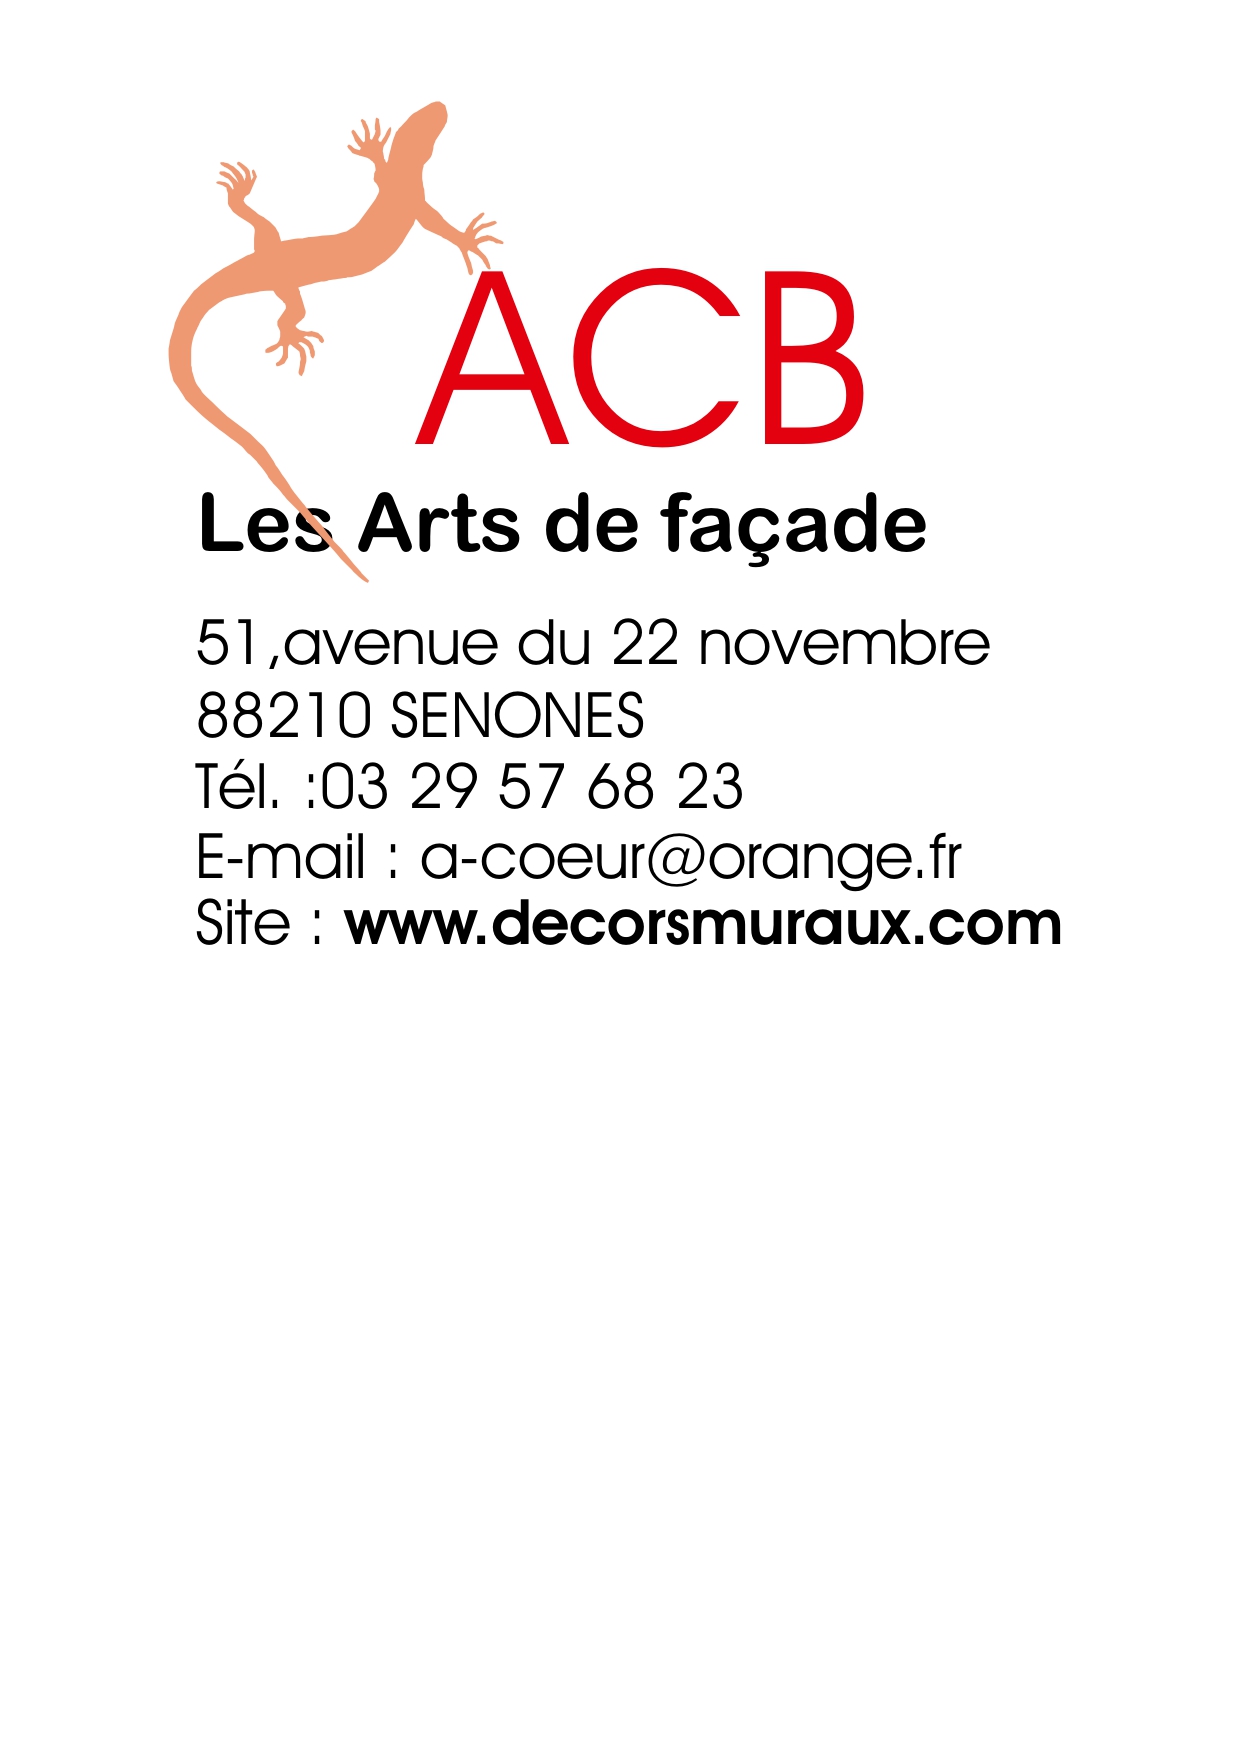 ACB LES ARTS DE FACADE